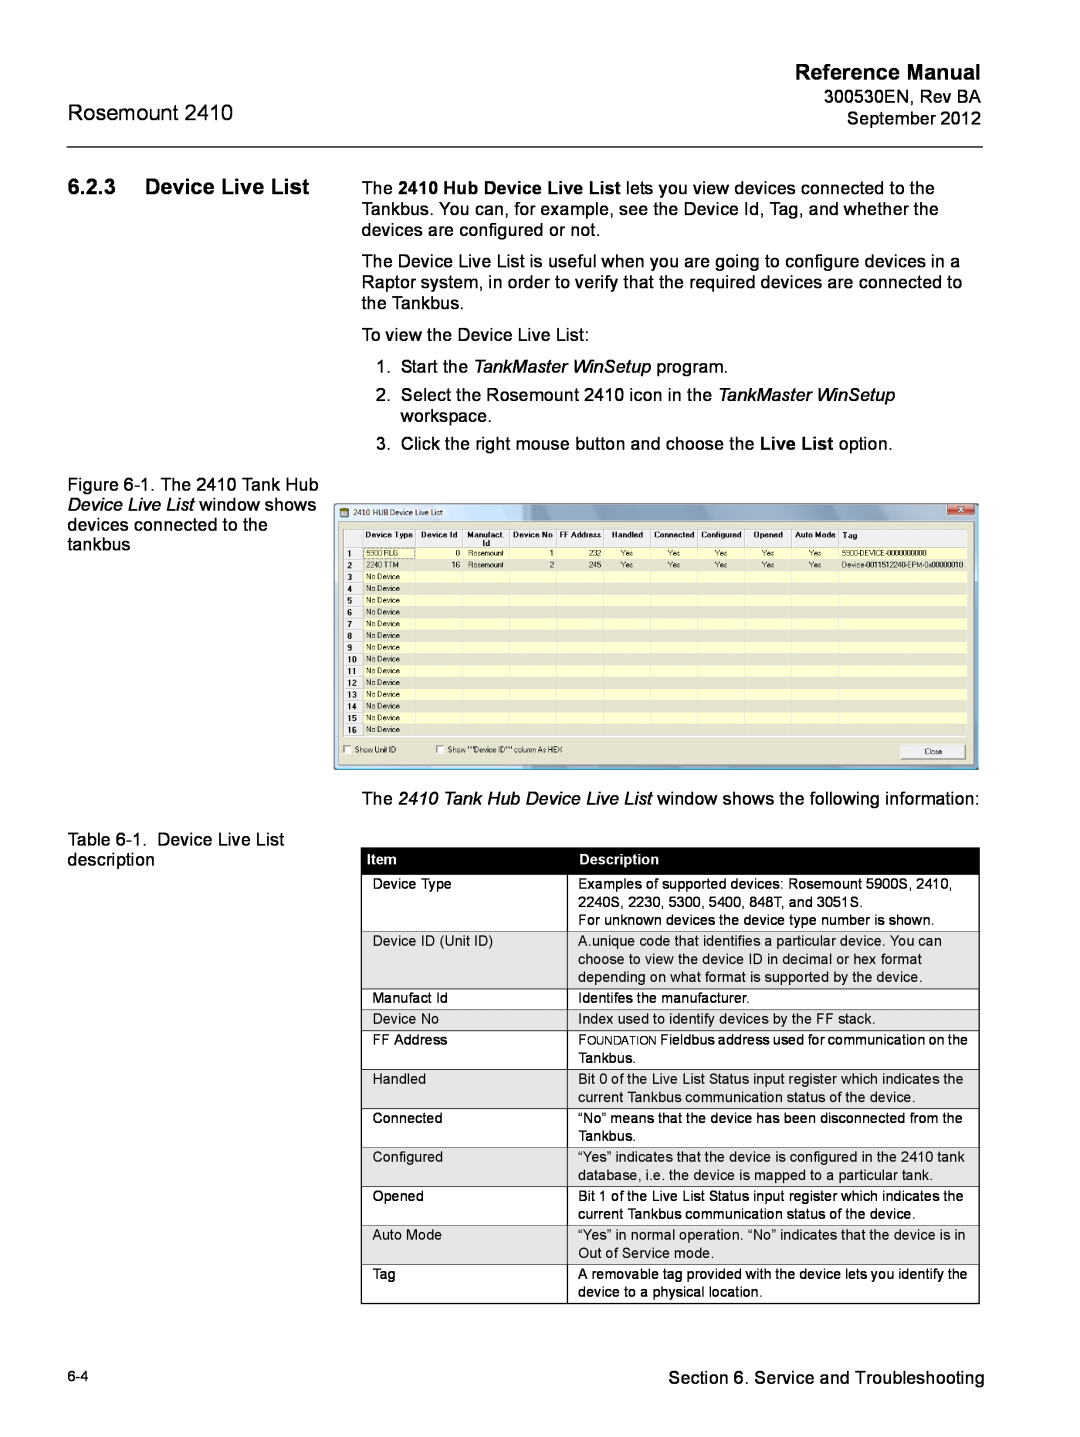 Emerson Process Management Rosemount 2410 manual Device Live List, Reference Manual, Start the TankMaster WinSetup program 